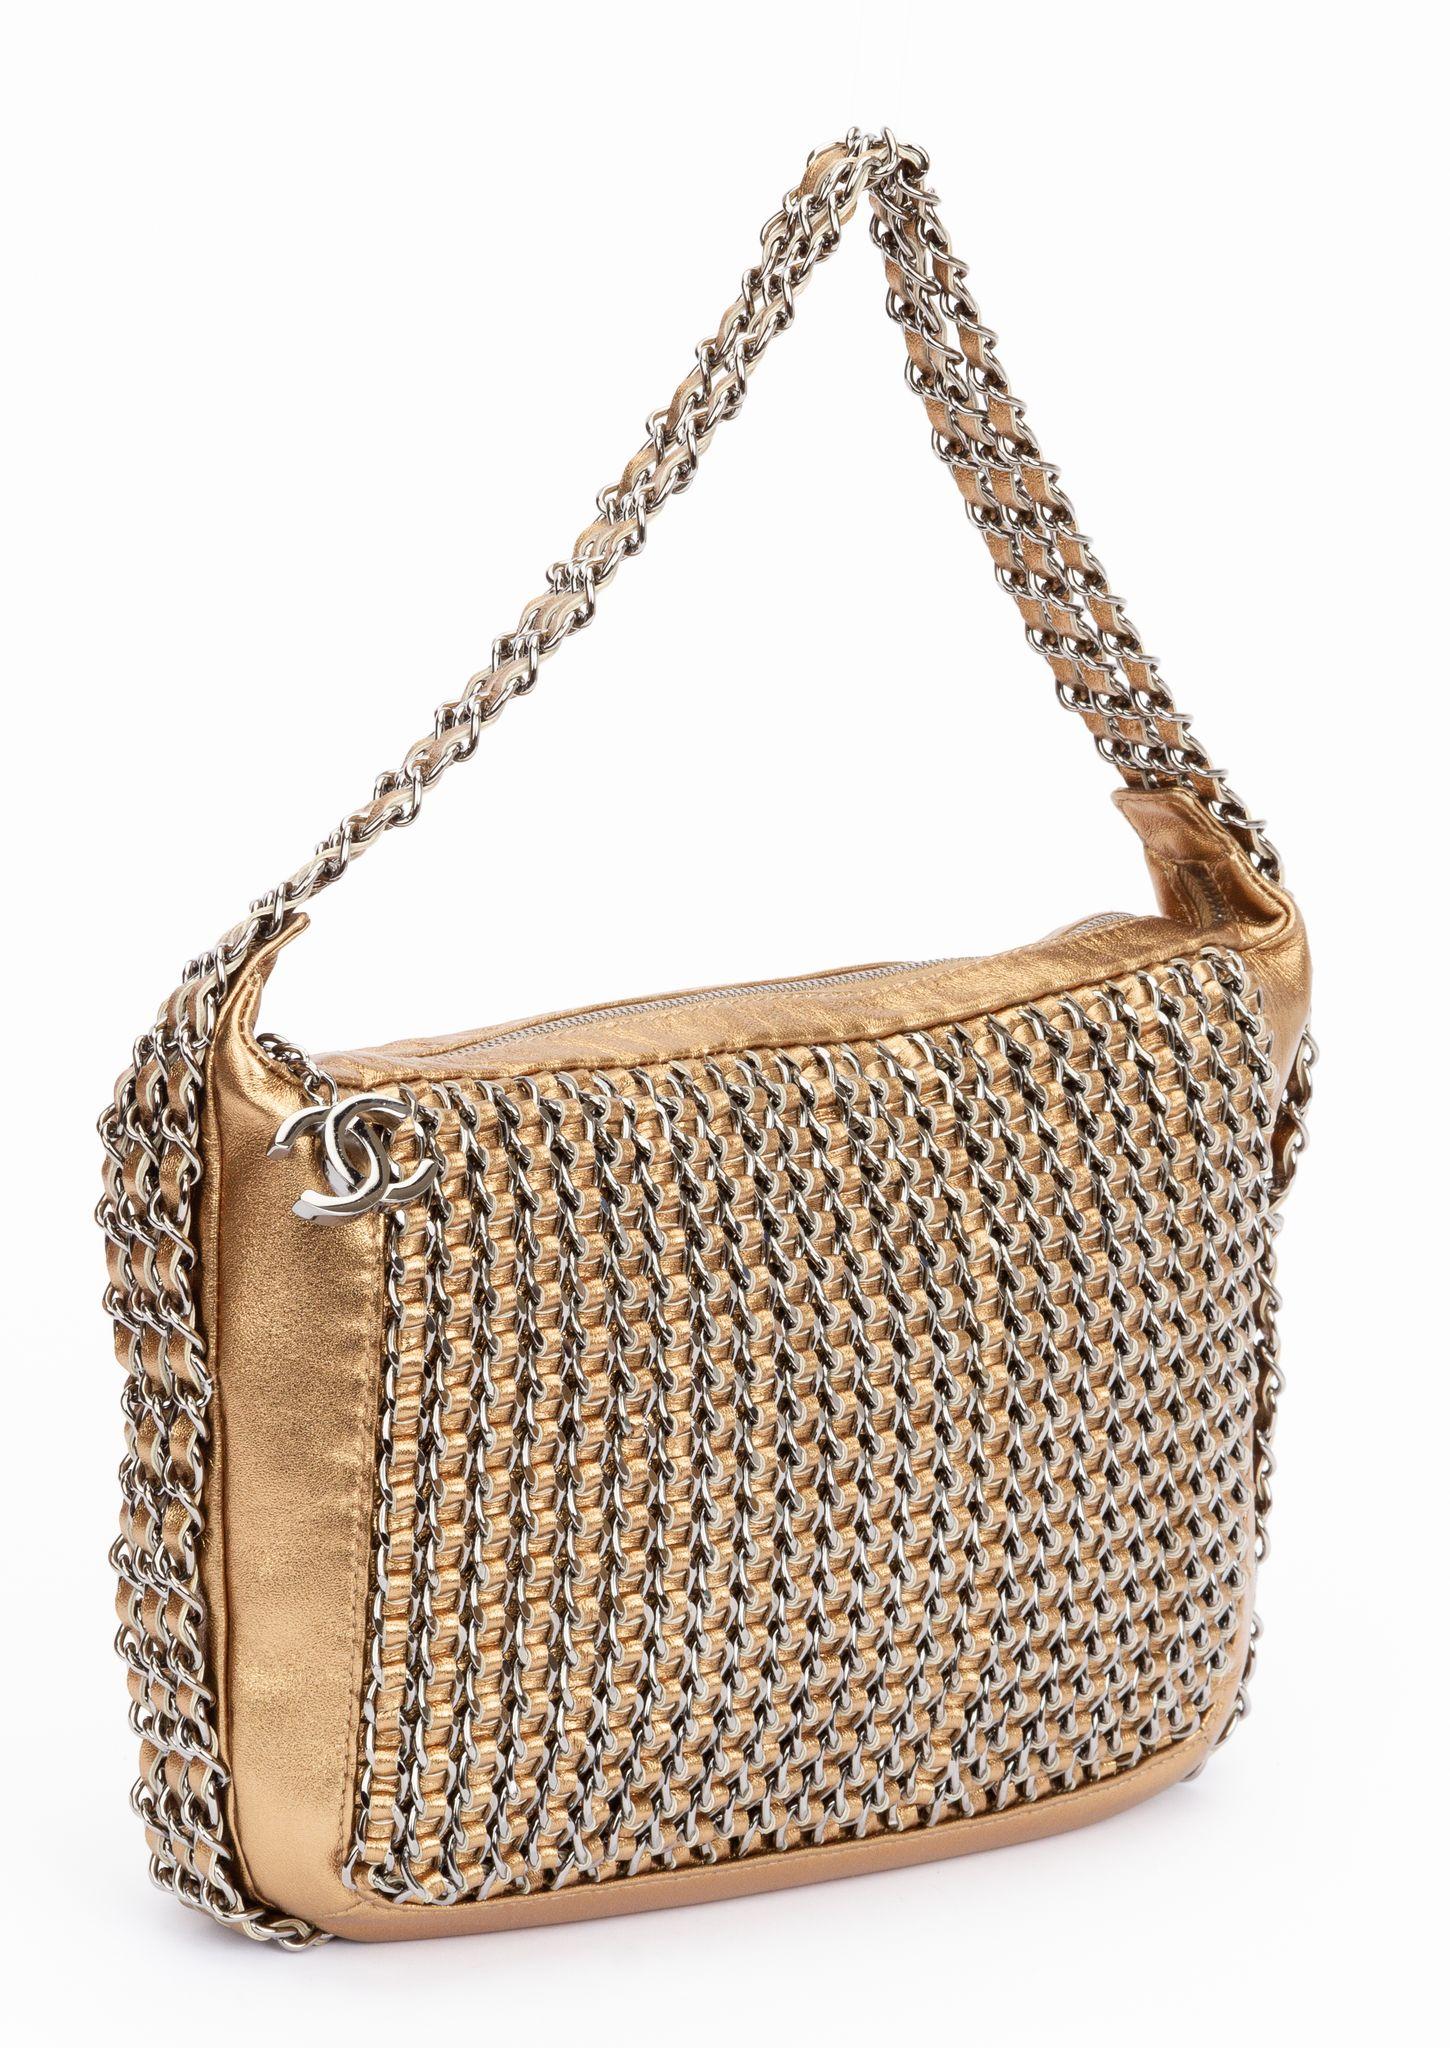 Chanel gold shoulder bag with ruthenium multi chain decoration. Handle drop 7